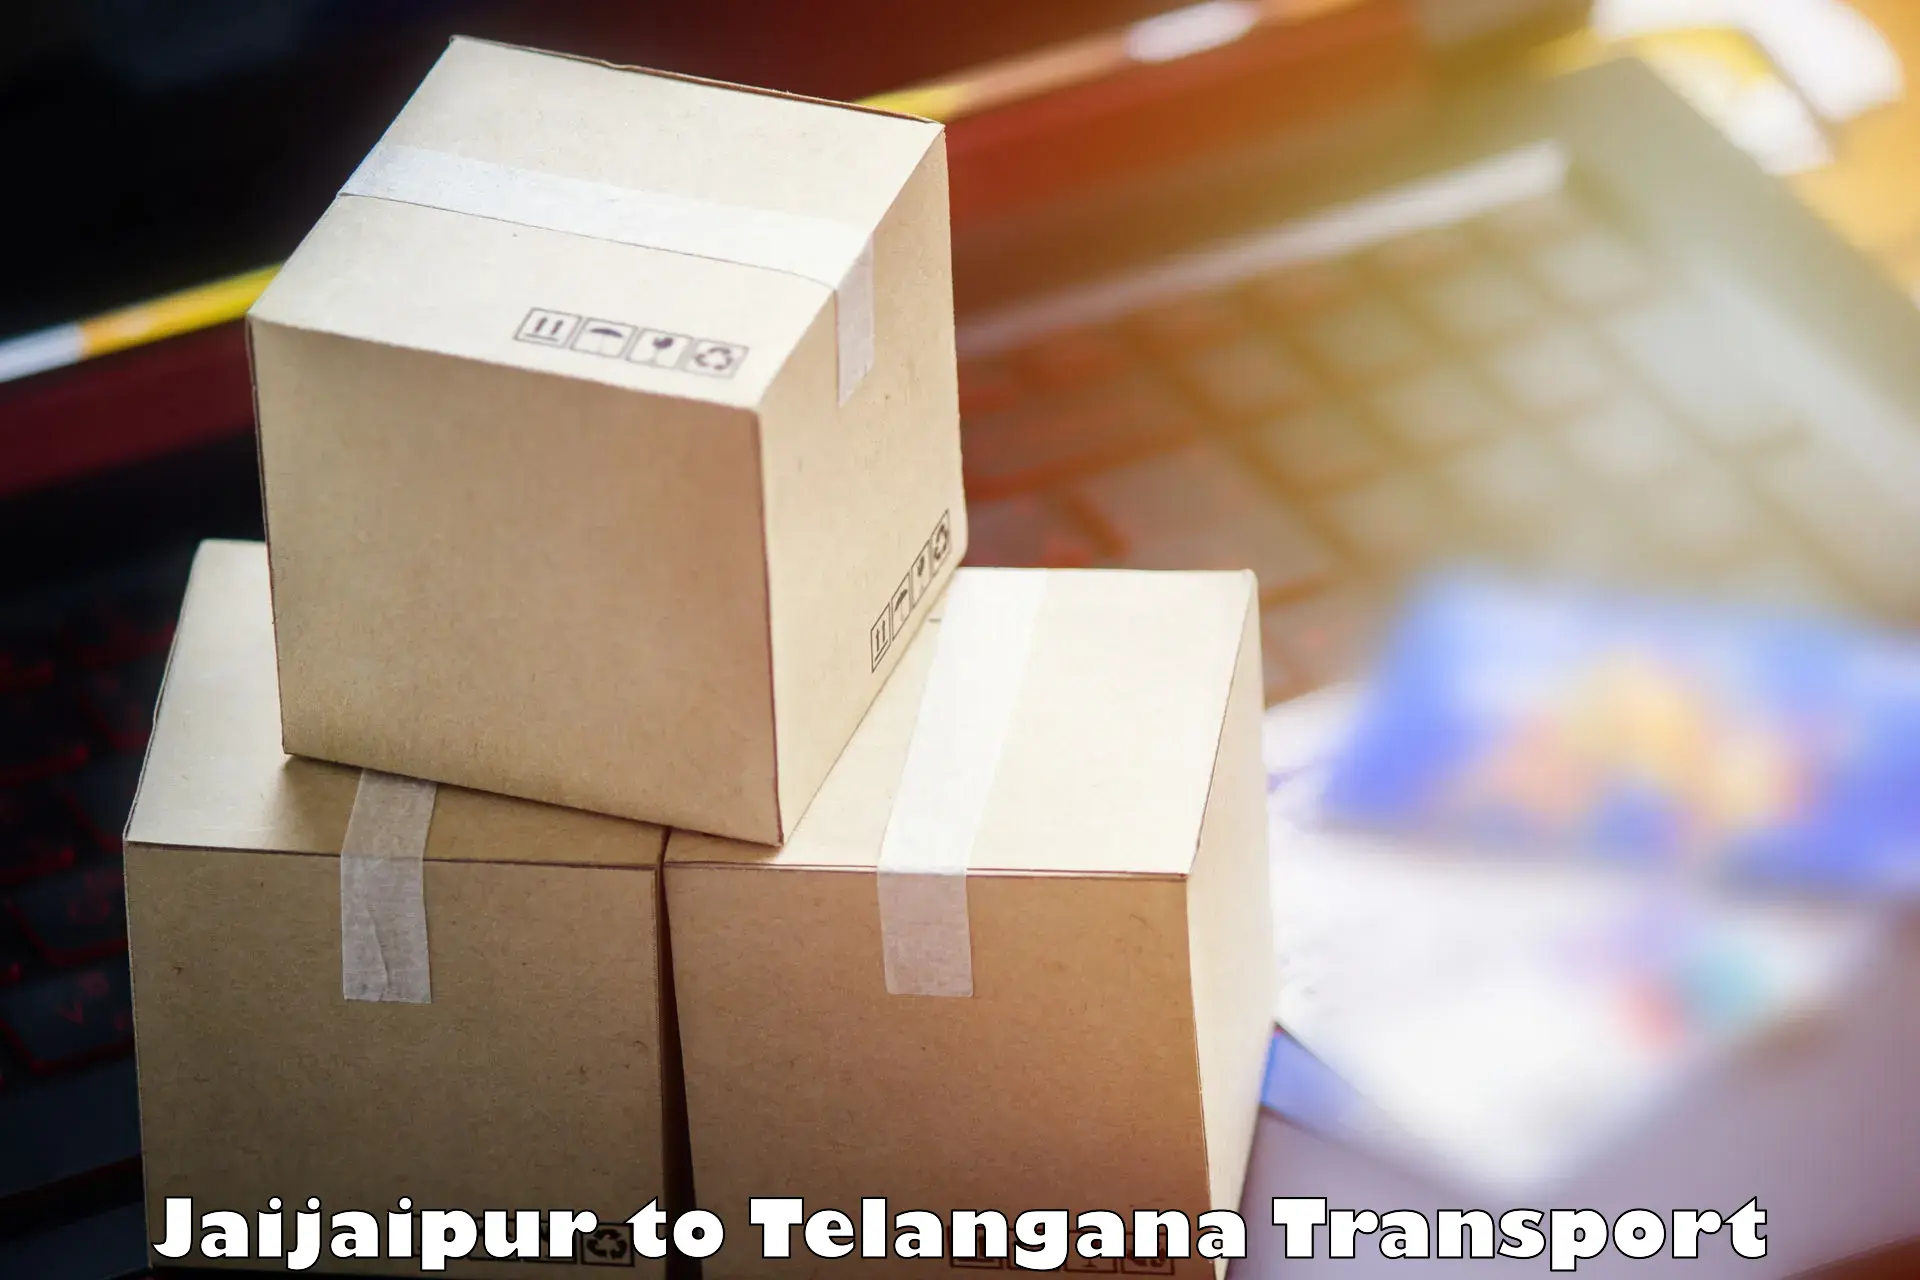 Delivery service Jaijaipur to Telangana